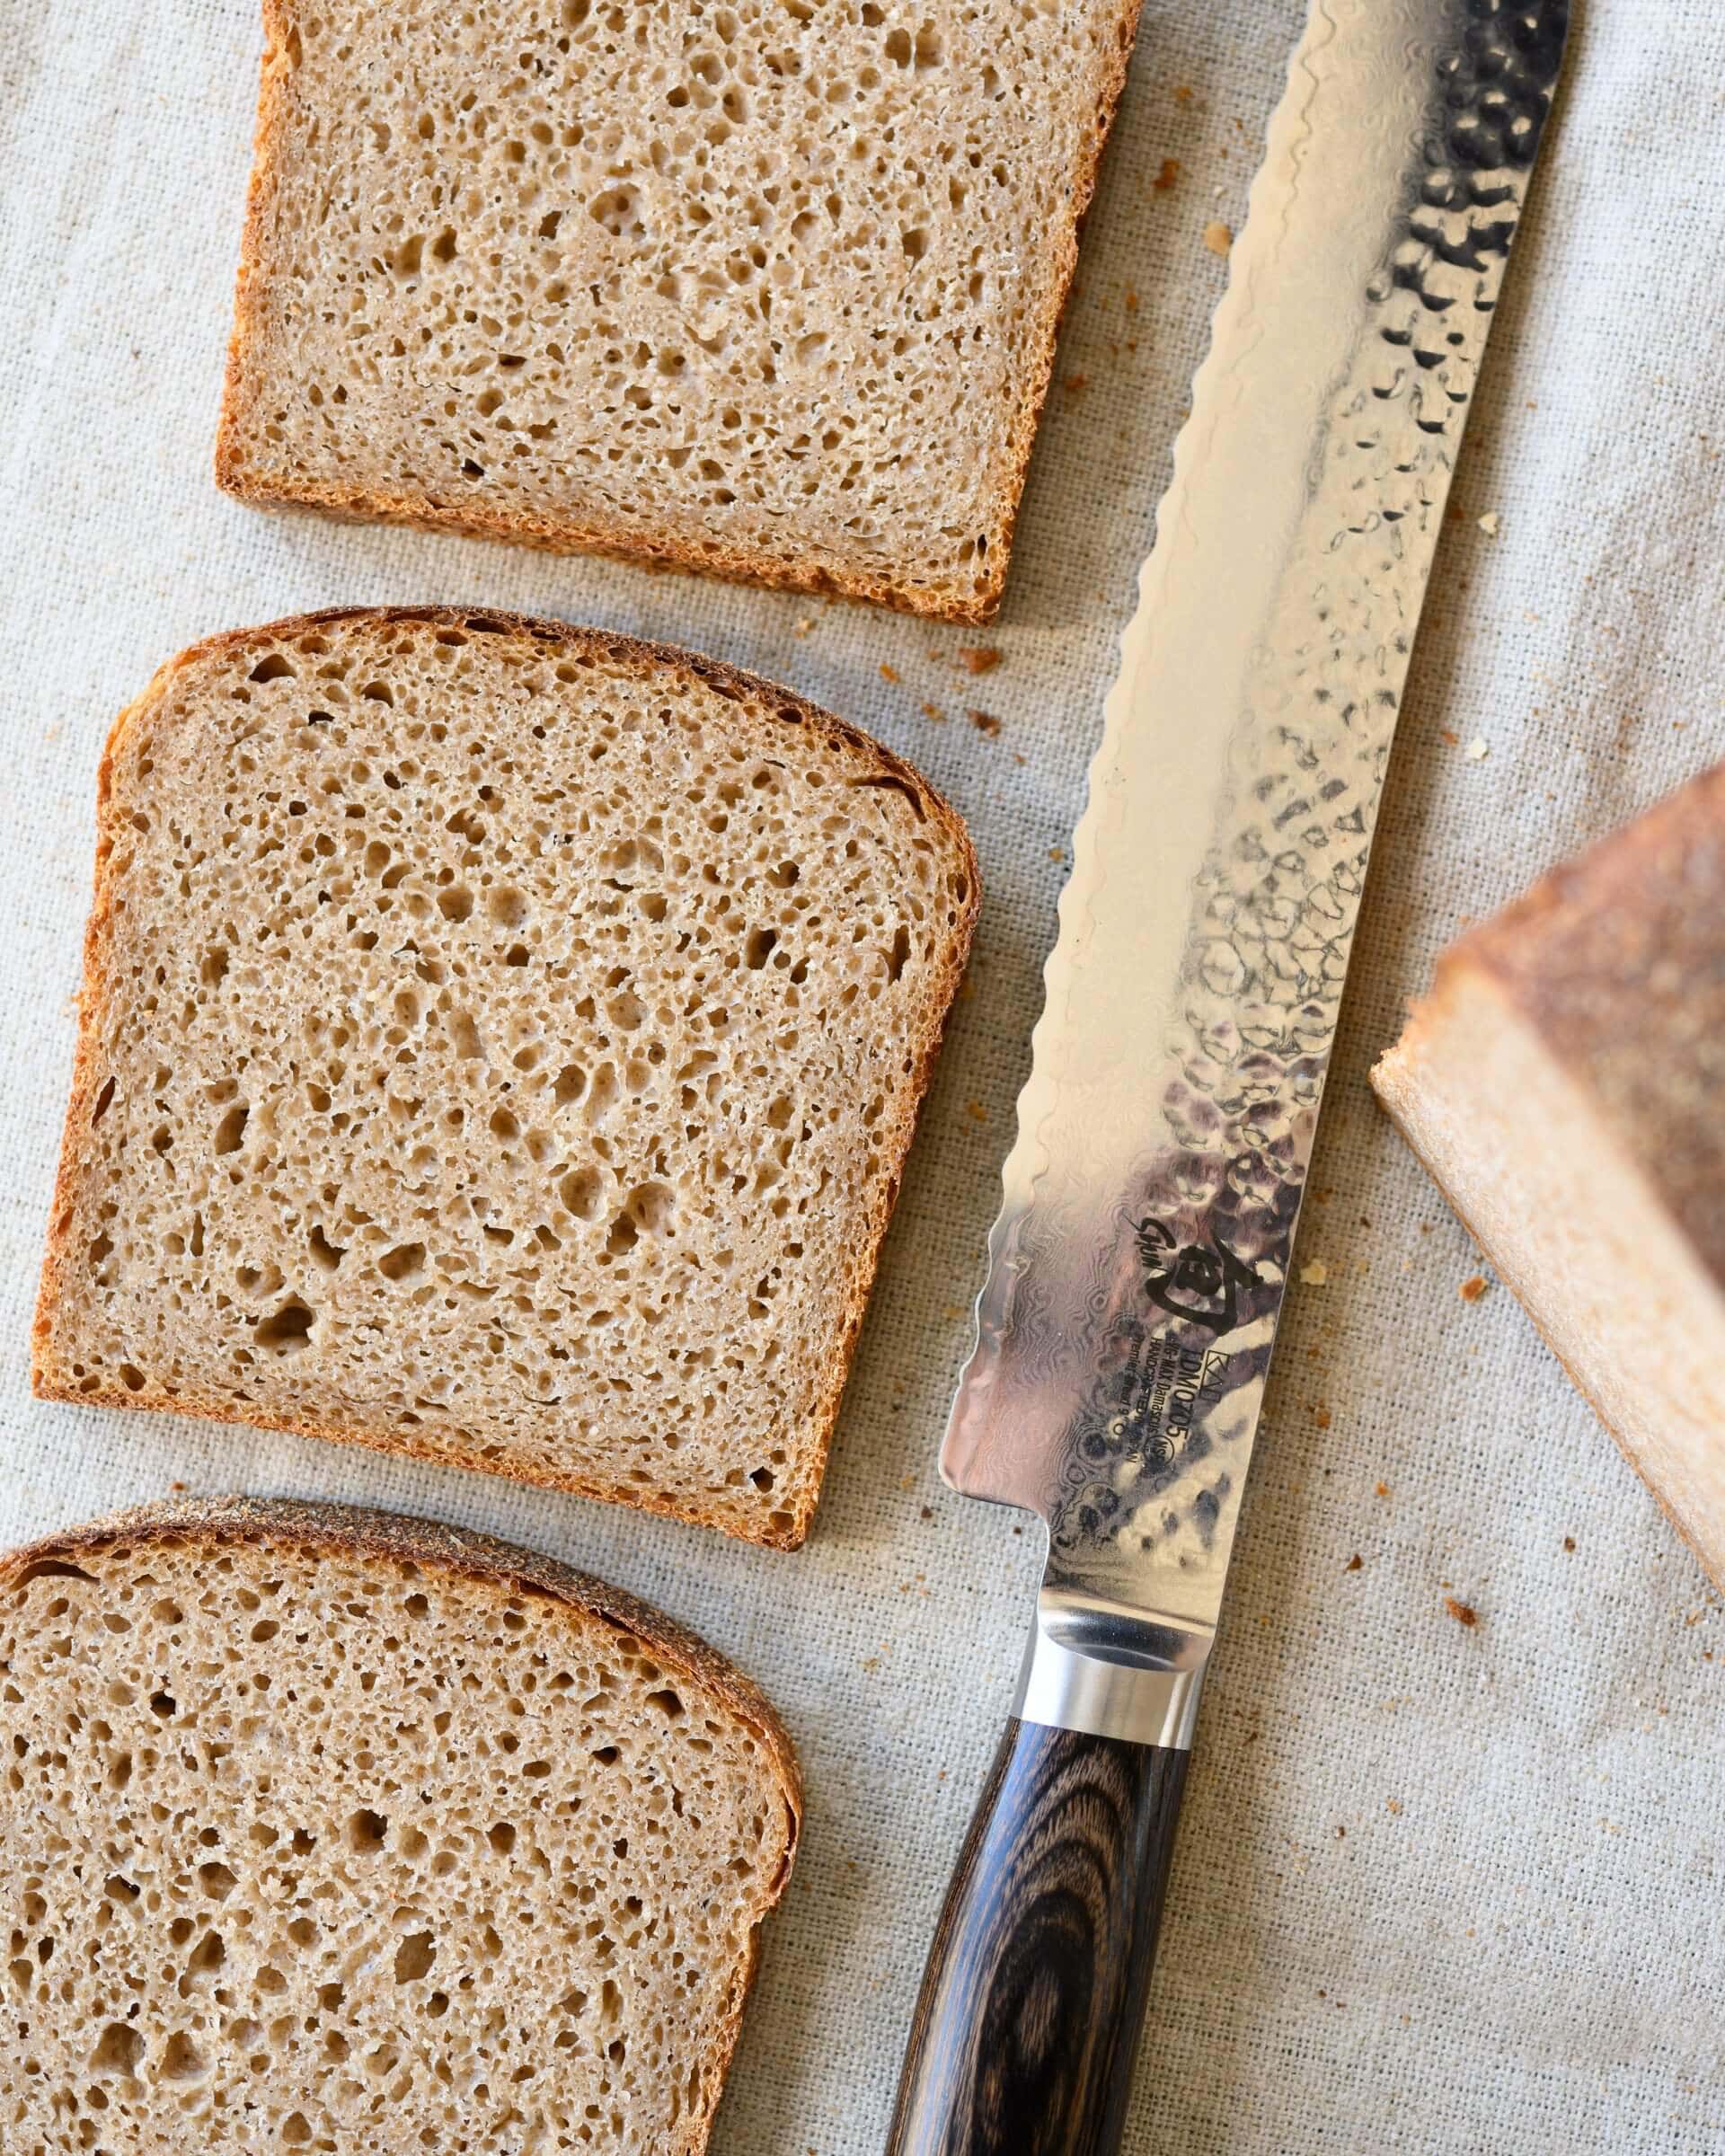 Crumb of the whole grain sourdough spelt pan loaf